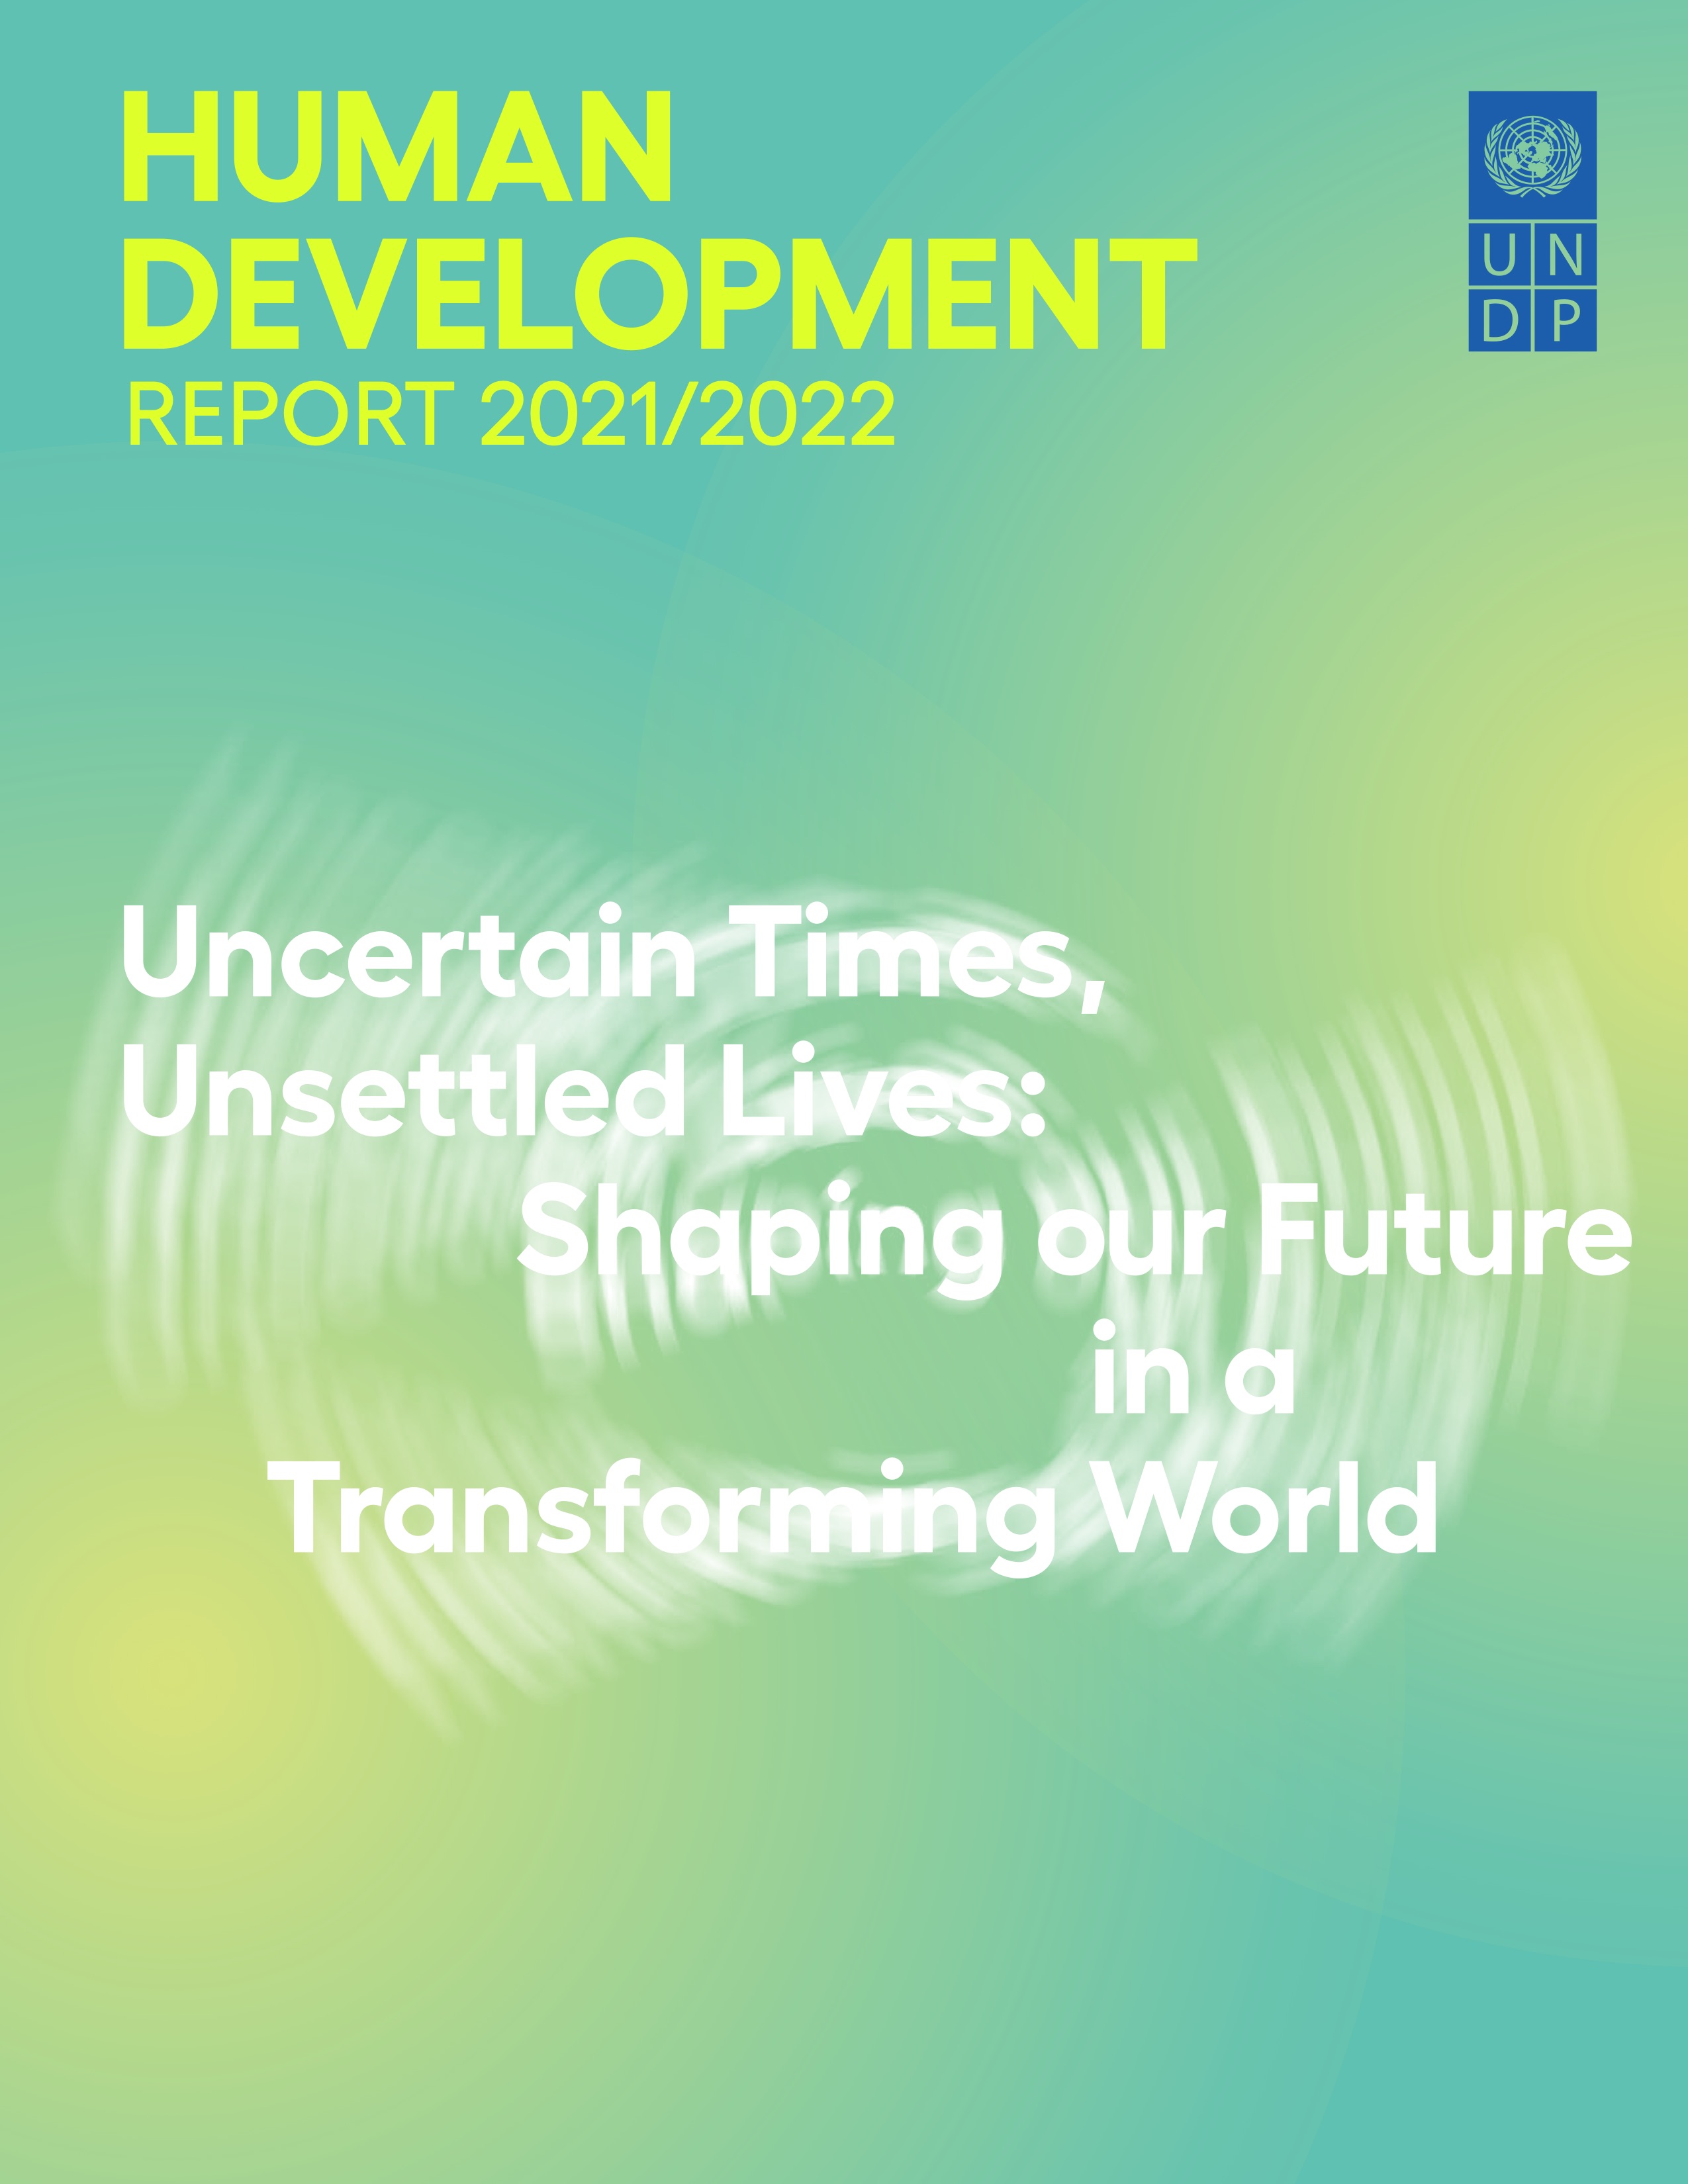 The 2021/2022 Human Development Report